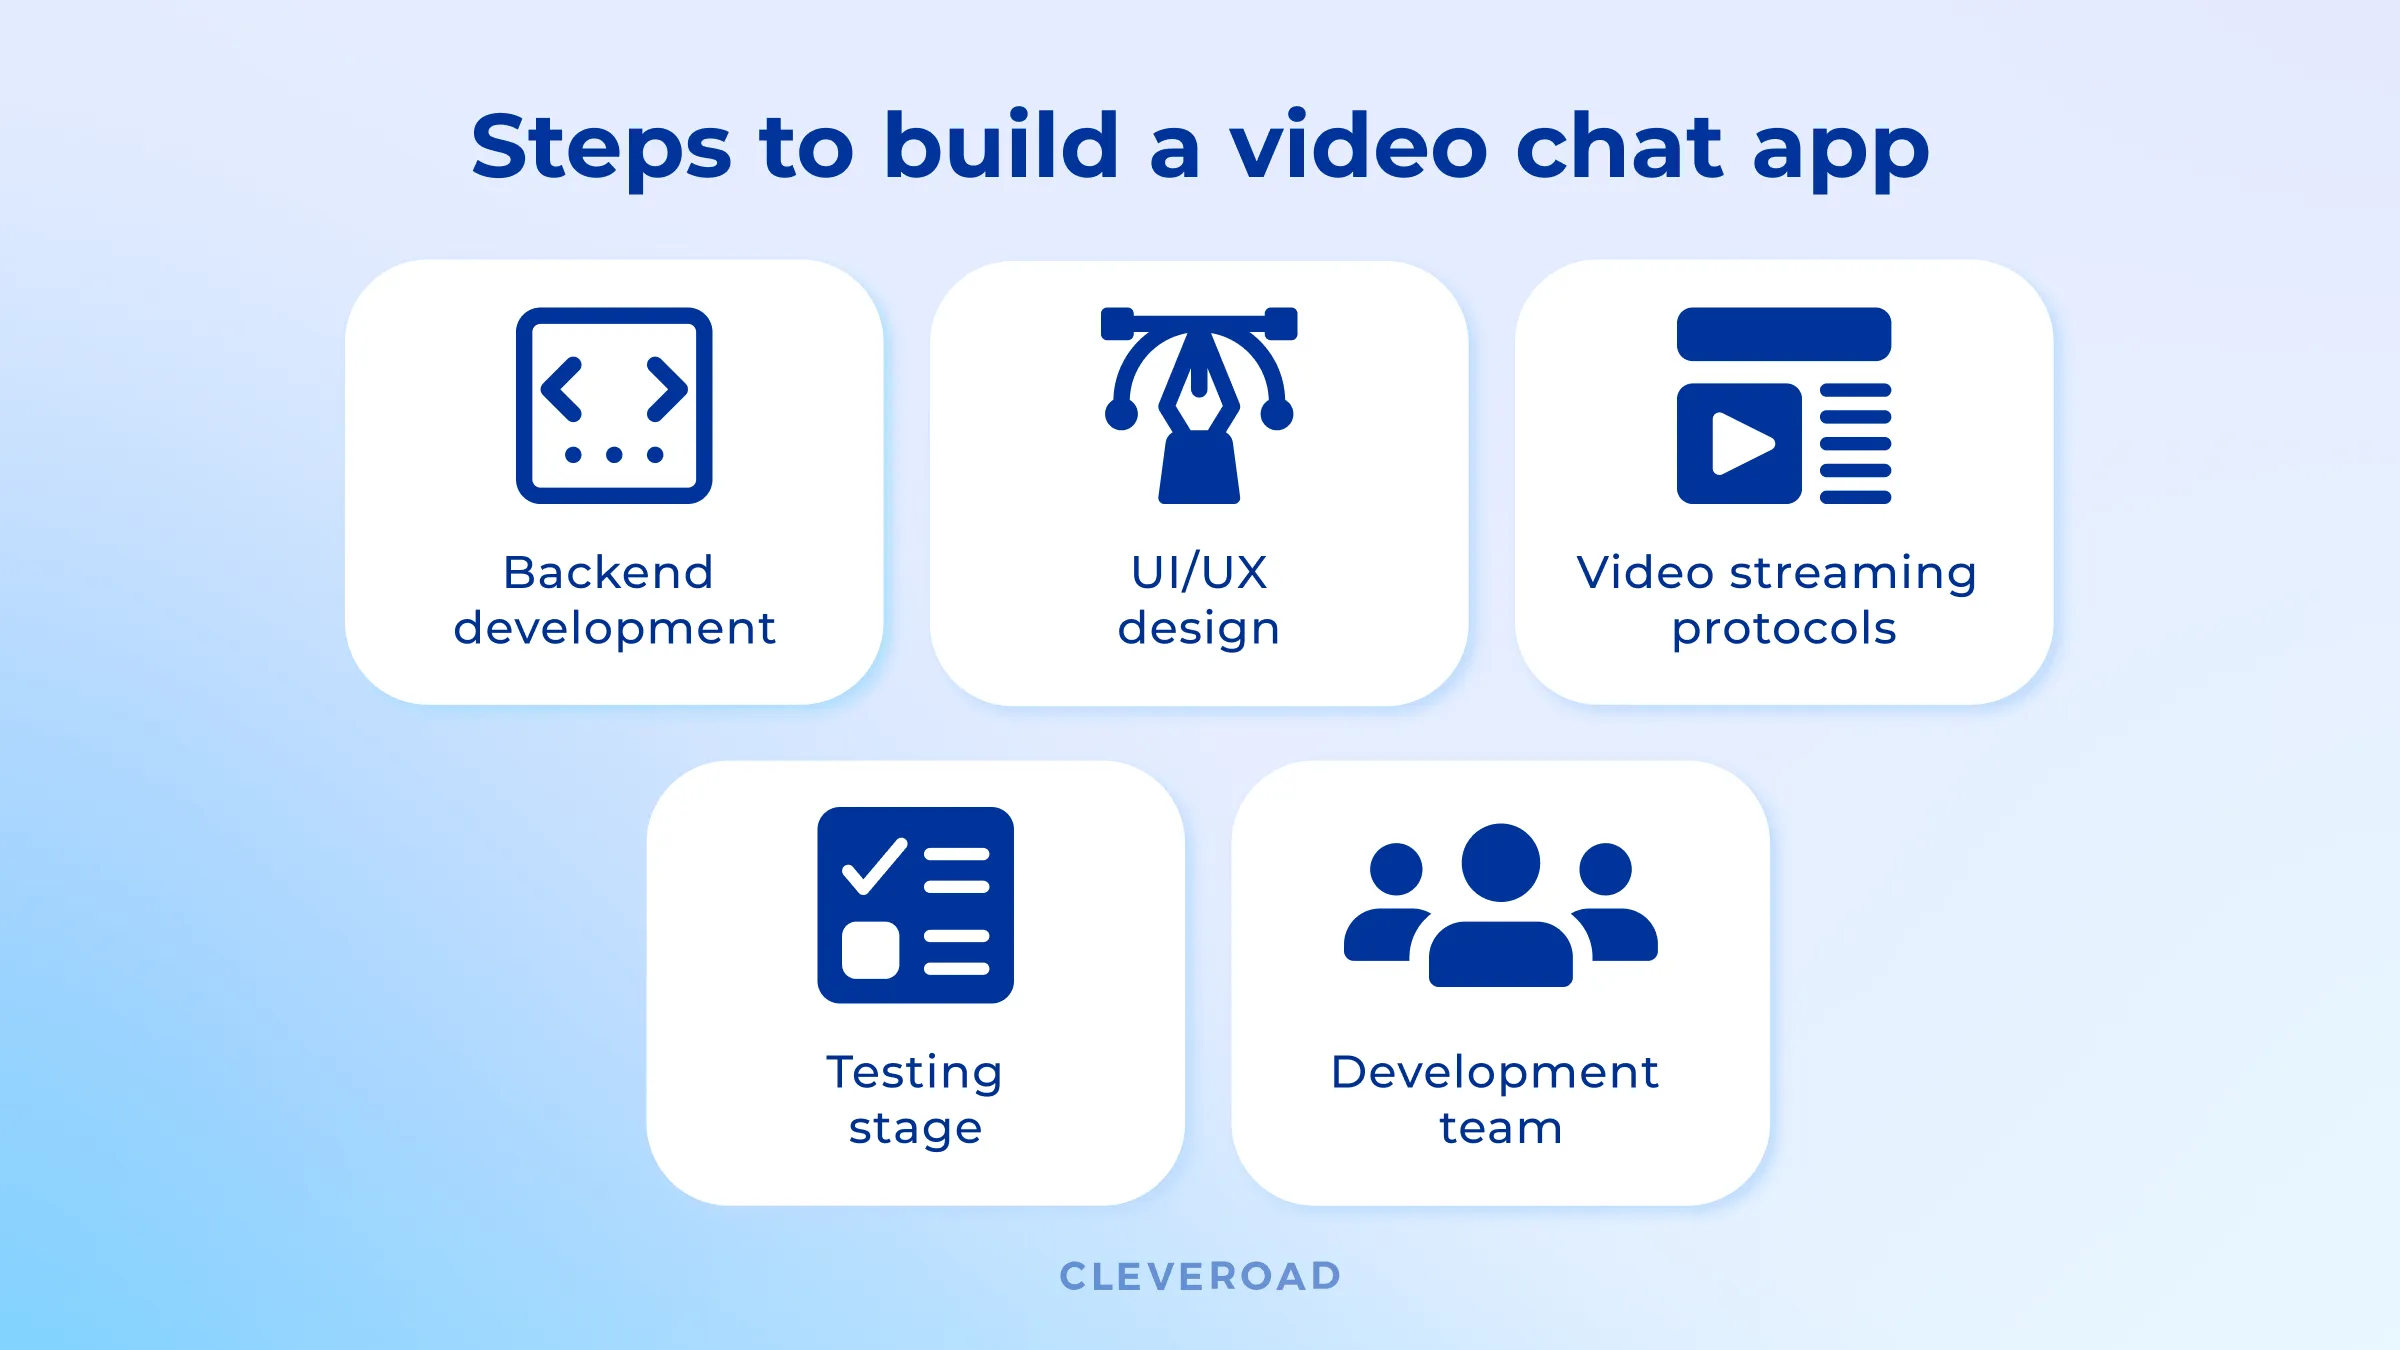 Steps of video chat app development